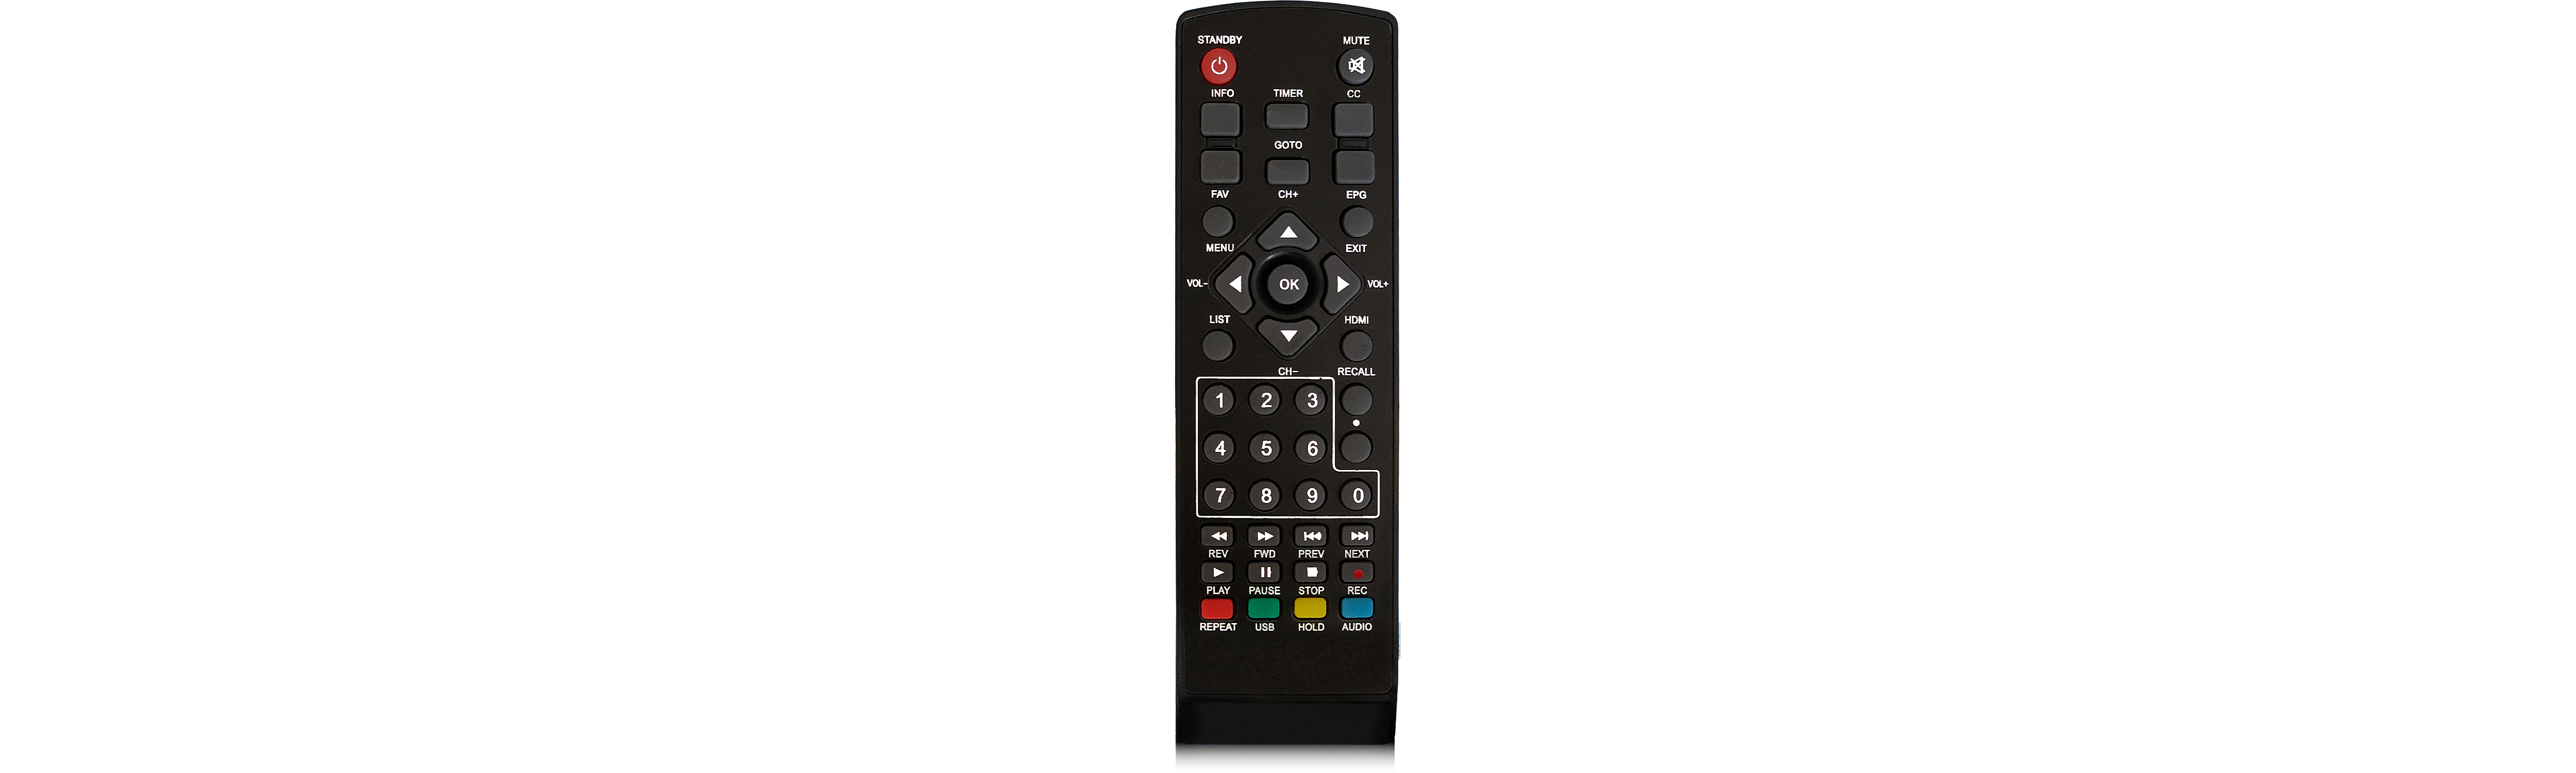 HDMI + AV OUT 1080P Receptor de satélite digital HD TV HD TV DVB-T-T2 TV TV  AV TUNER CONVERADOR CON CONTROL REMOTO, SOPORTE MPEG4 (blanco)